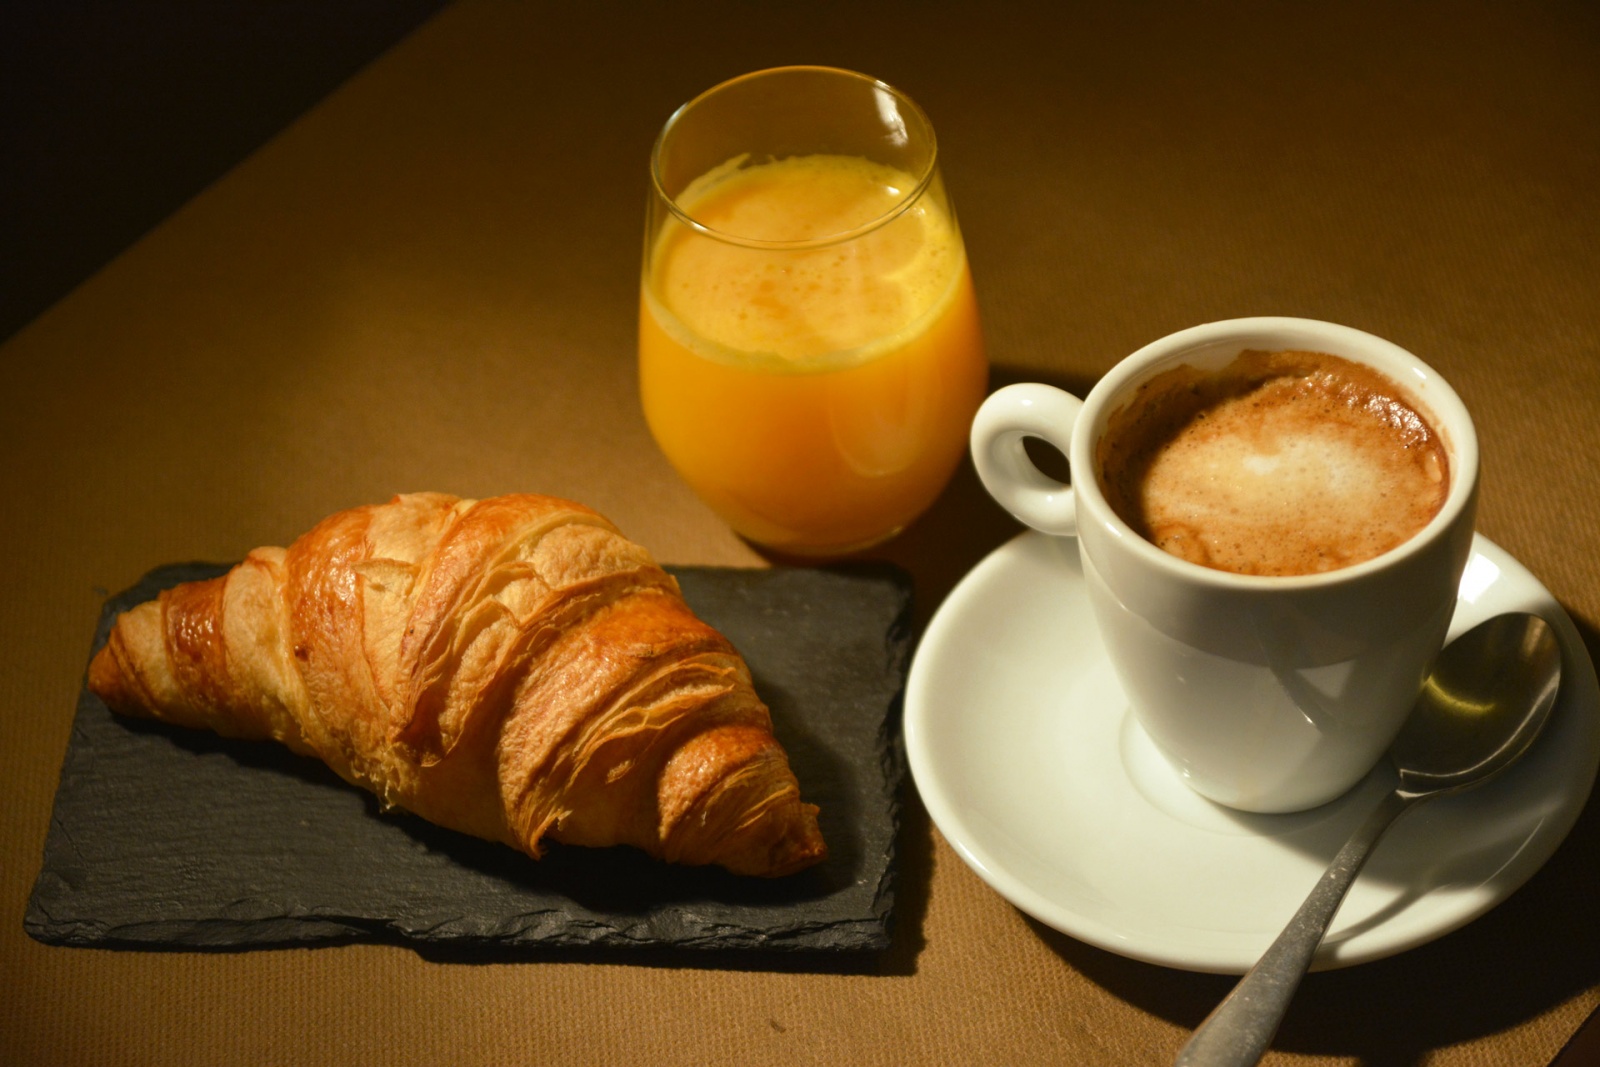 desayuno-dulce-croissant2.jpg